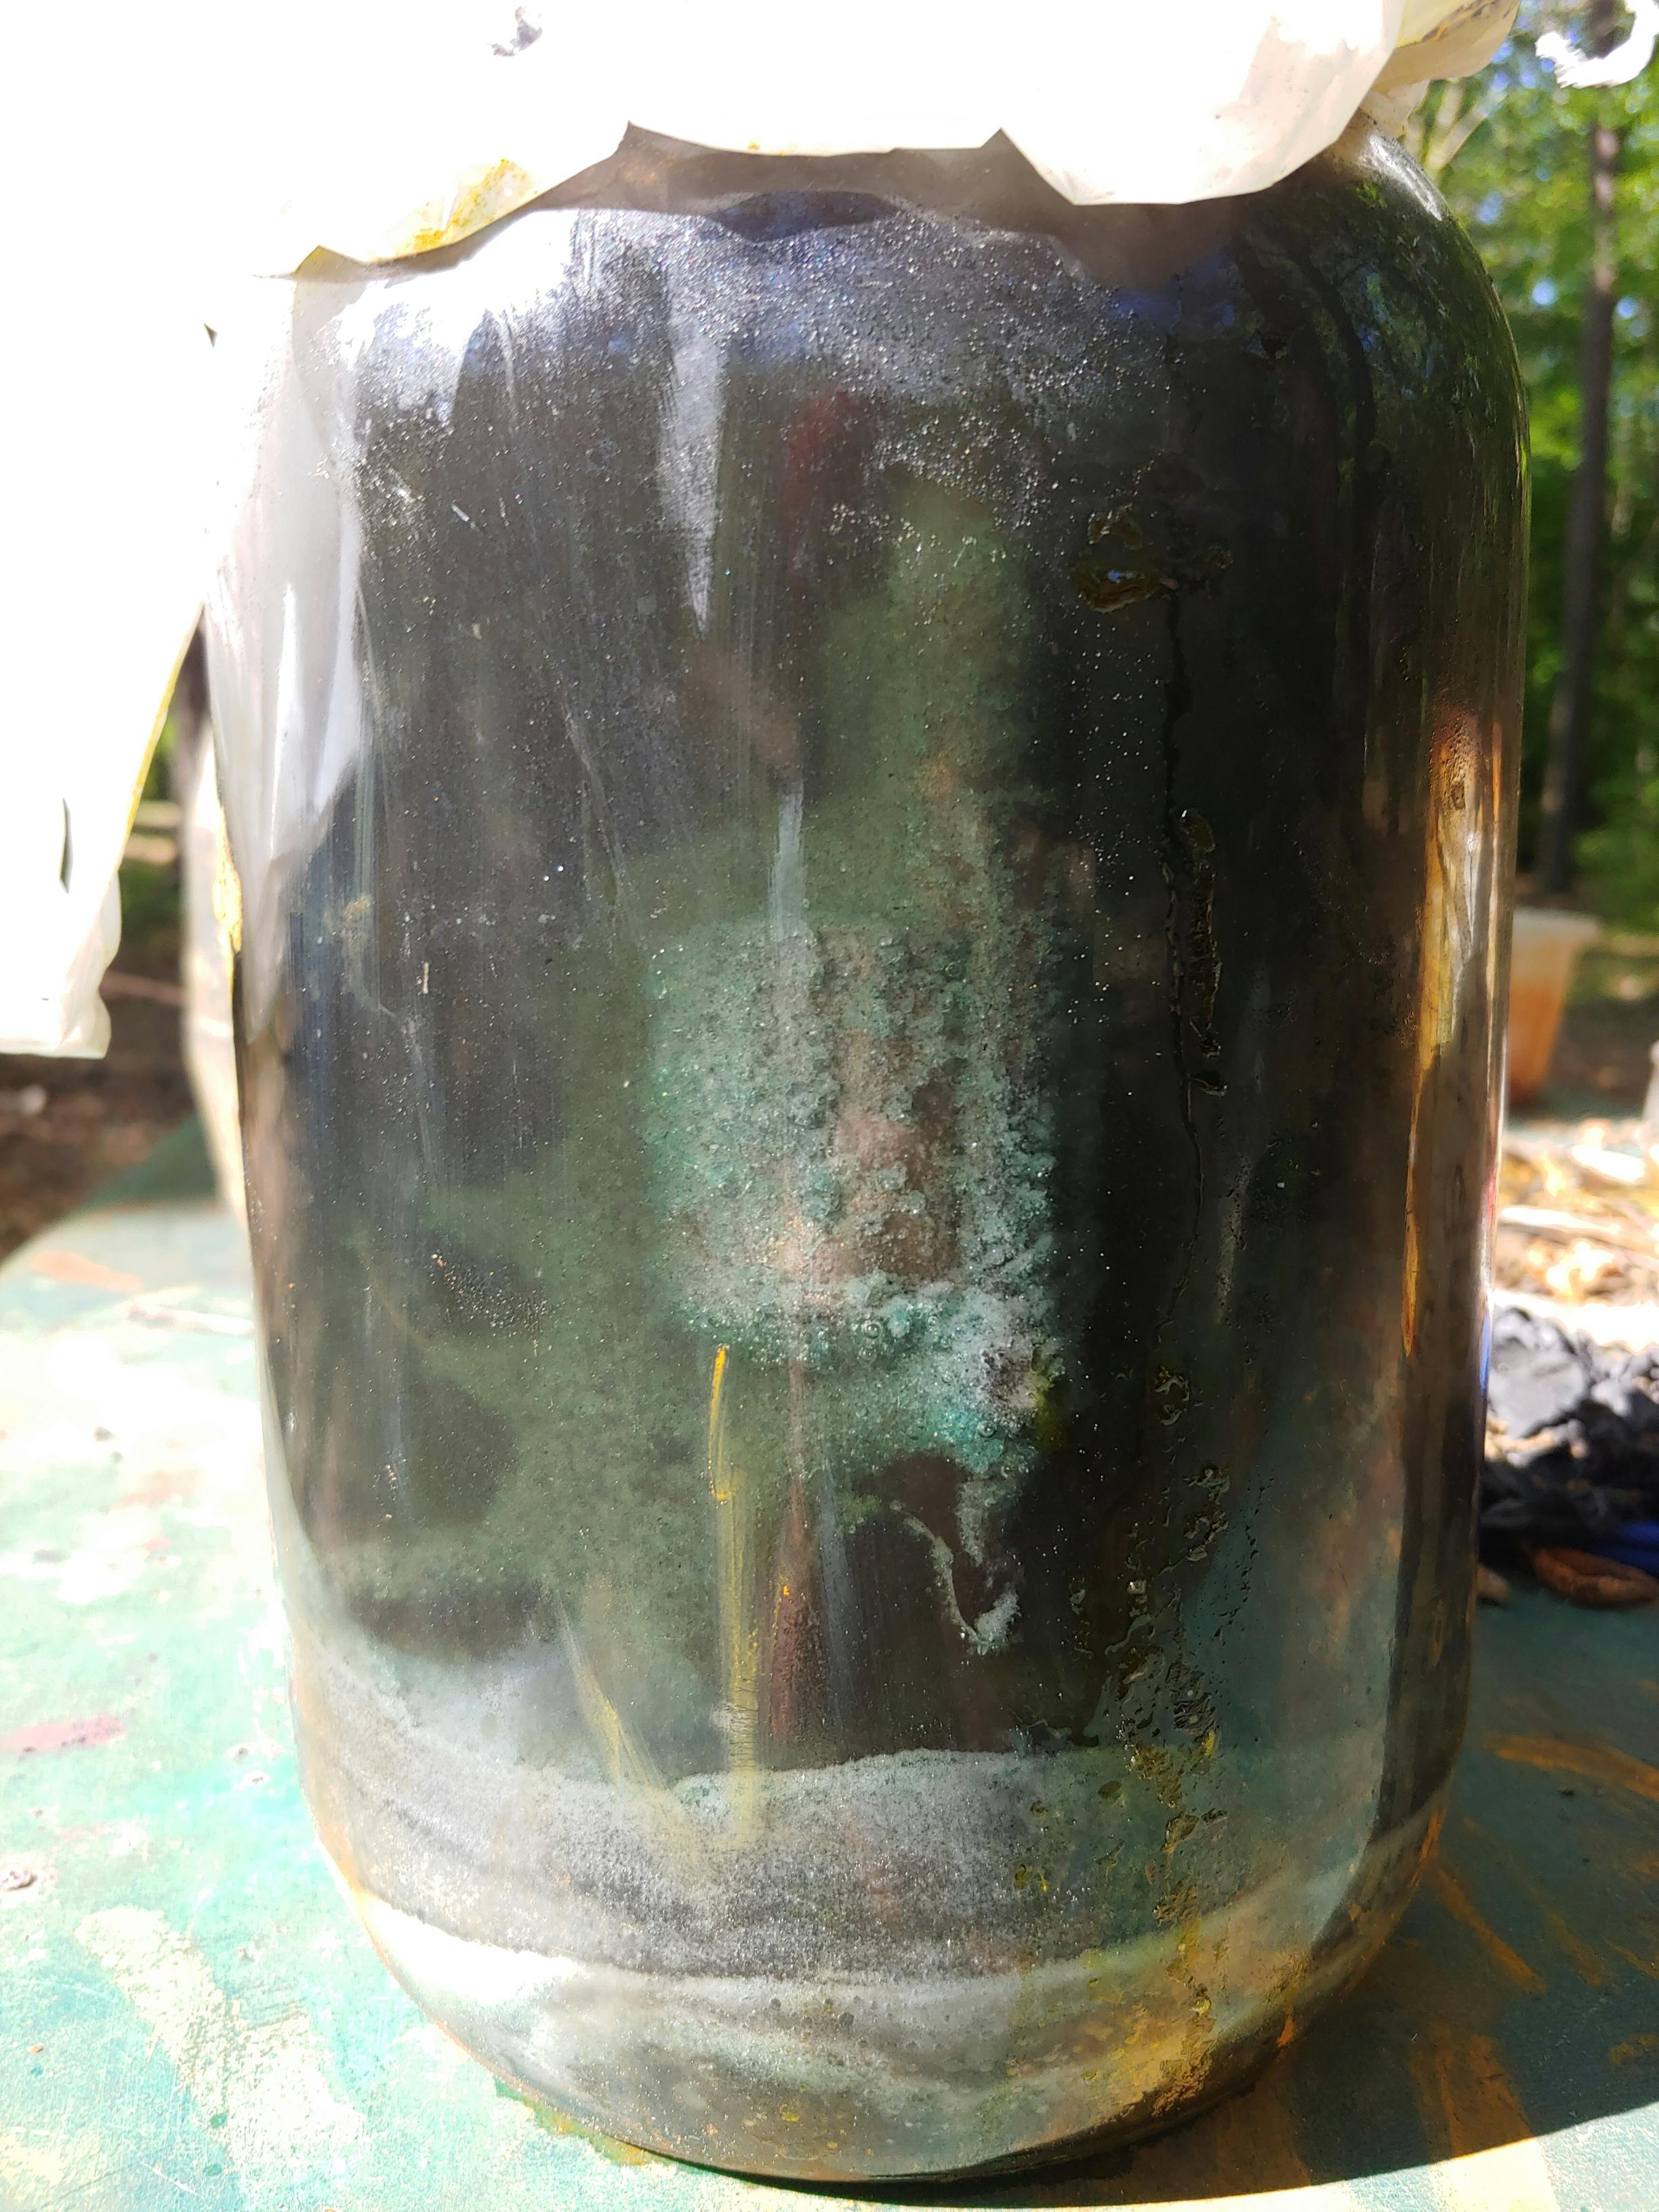 large glass jar with handgun submerged in murky liquid